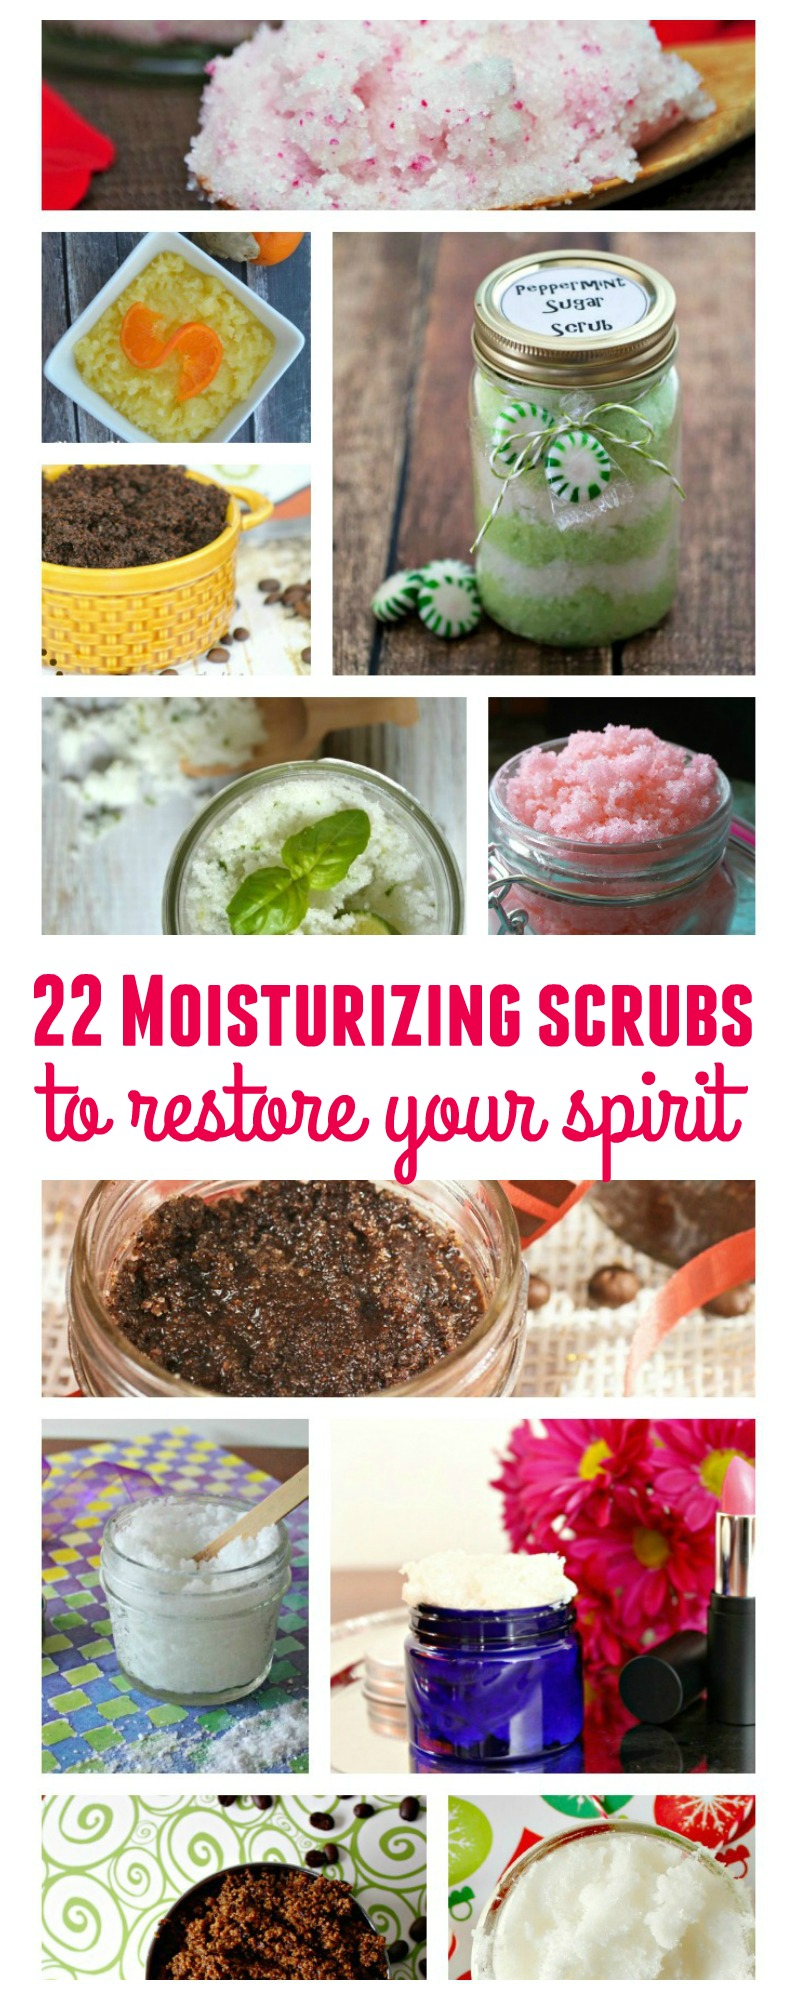 22 amazing moisturizing scrubs to restore your spirit